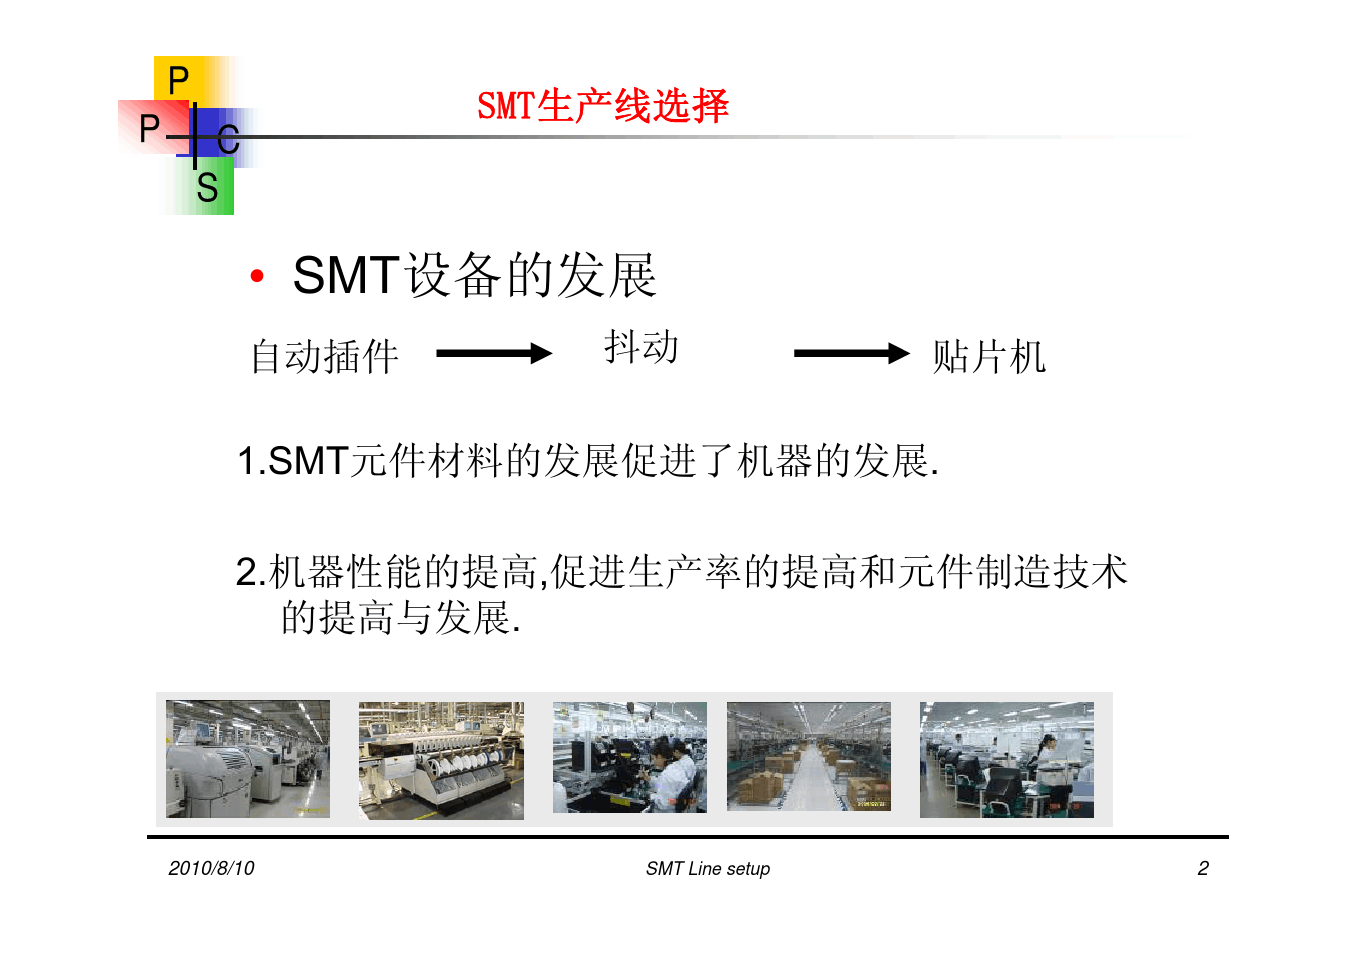 SMT生产线 配置与优化 OEE